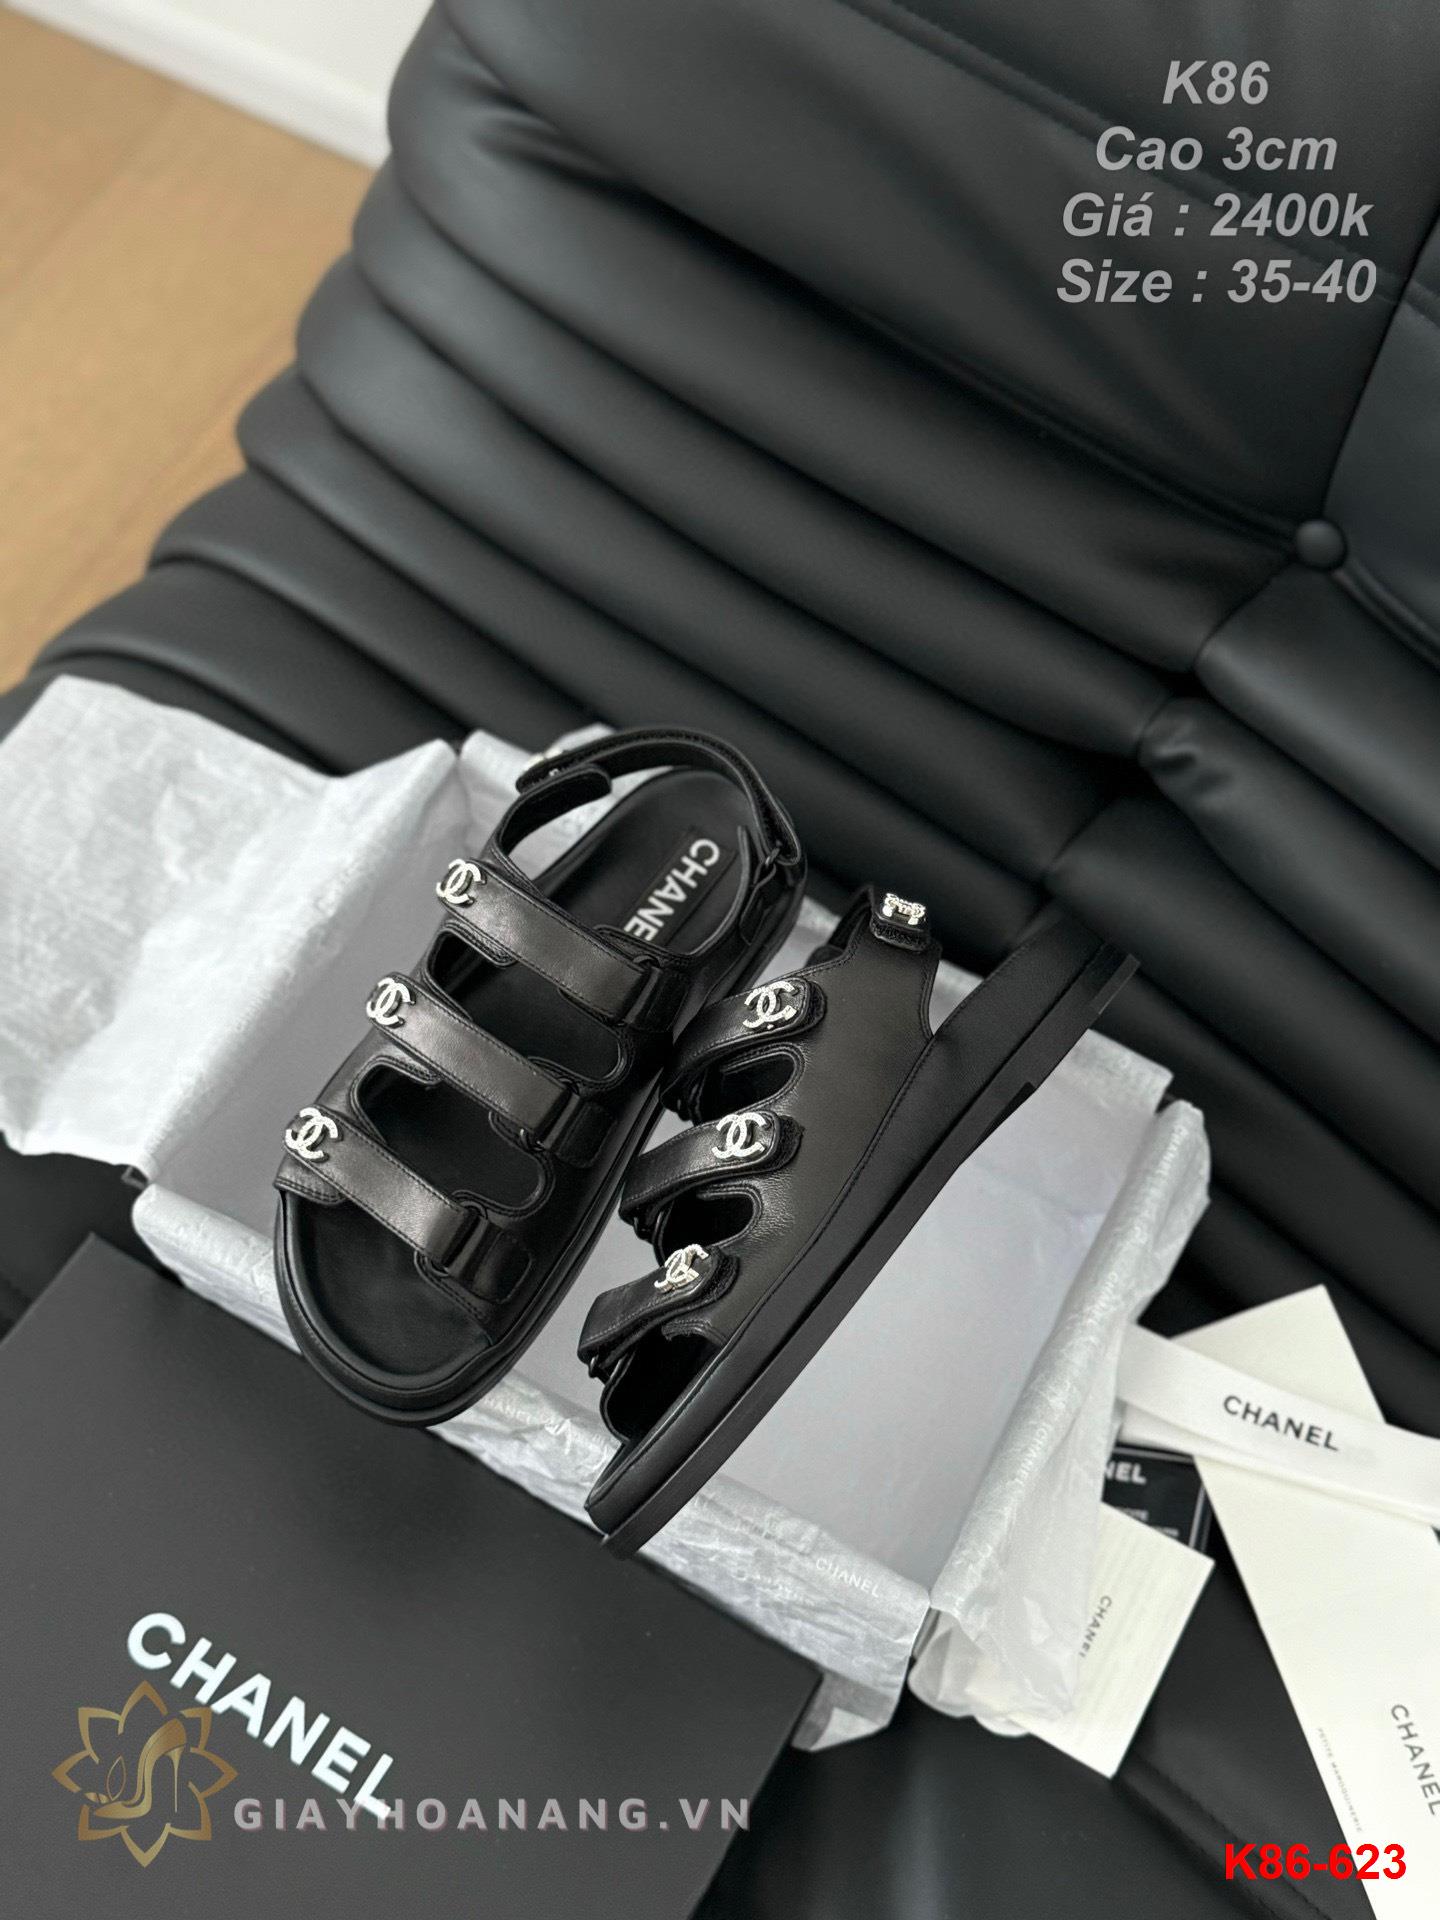 K86-623 Chanel sandal cao 3cm siêu cấp